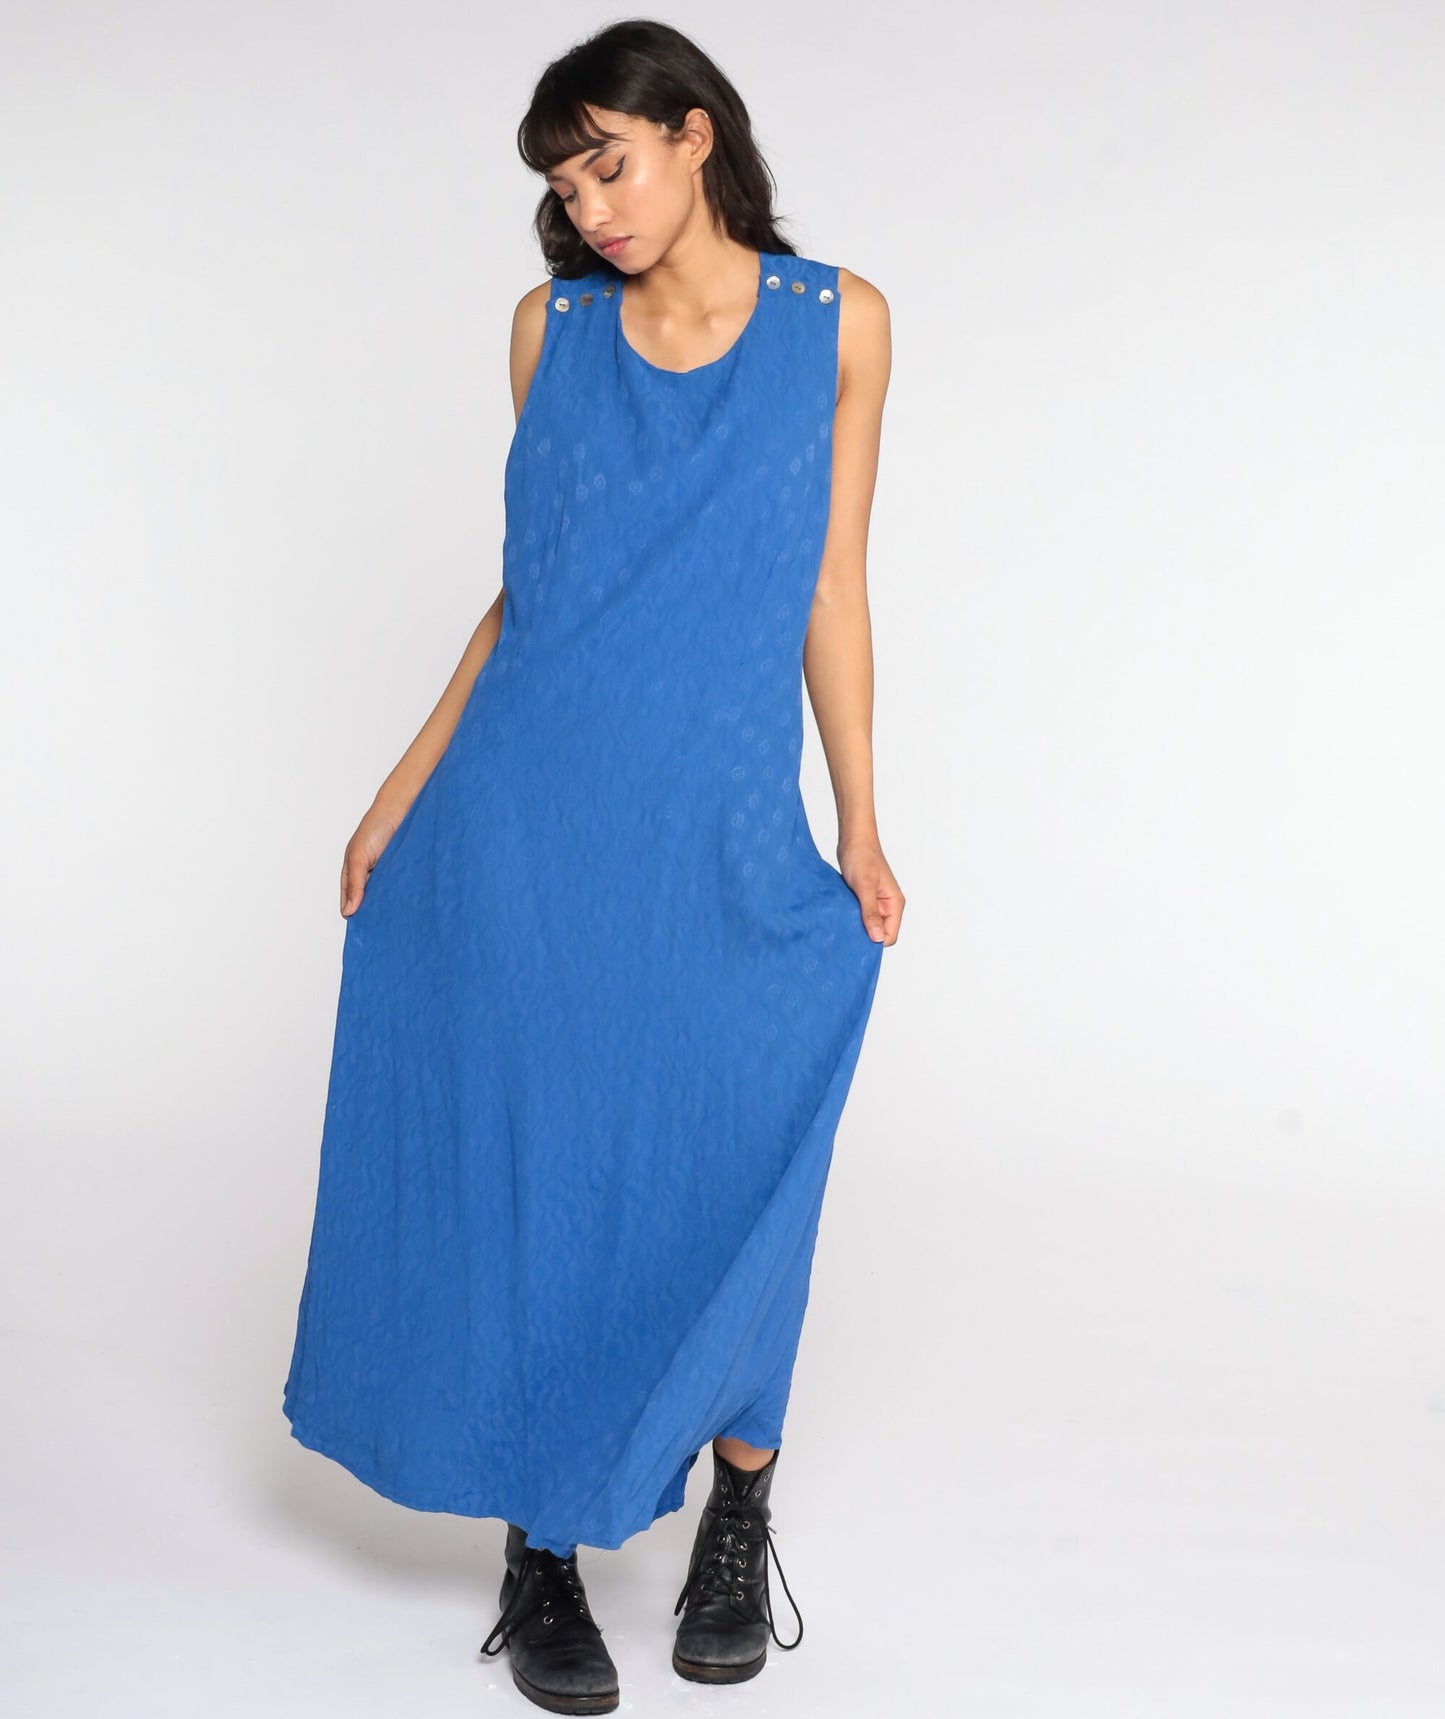 Liz Claiborne Dress 90s Maxi Dress Blue Dress Embossed Jumper Dress Sleeveless Dress Vintage 1990s Bohemian Retro Sheath Criss Cross Medium